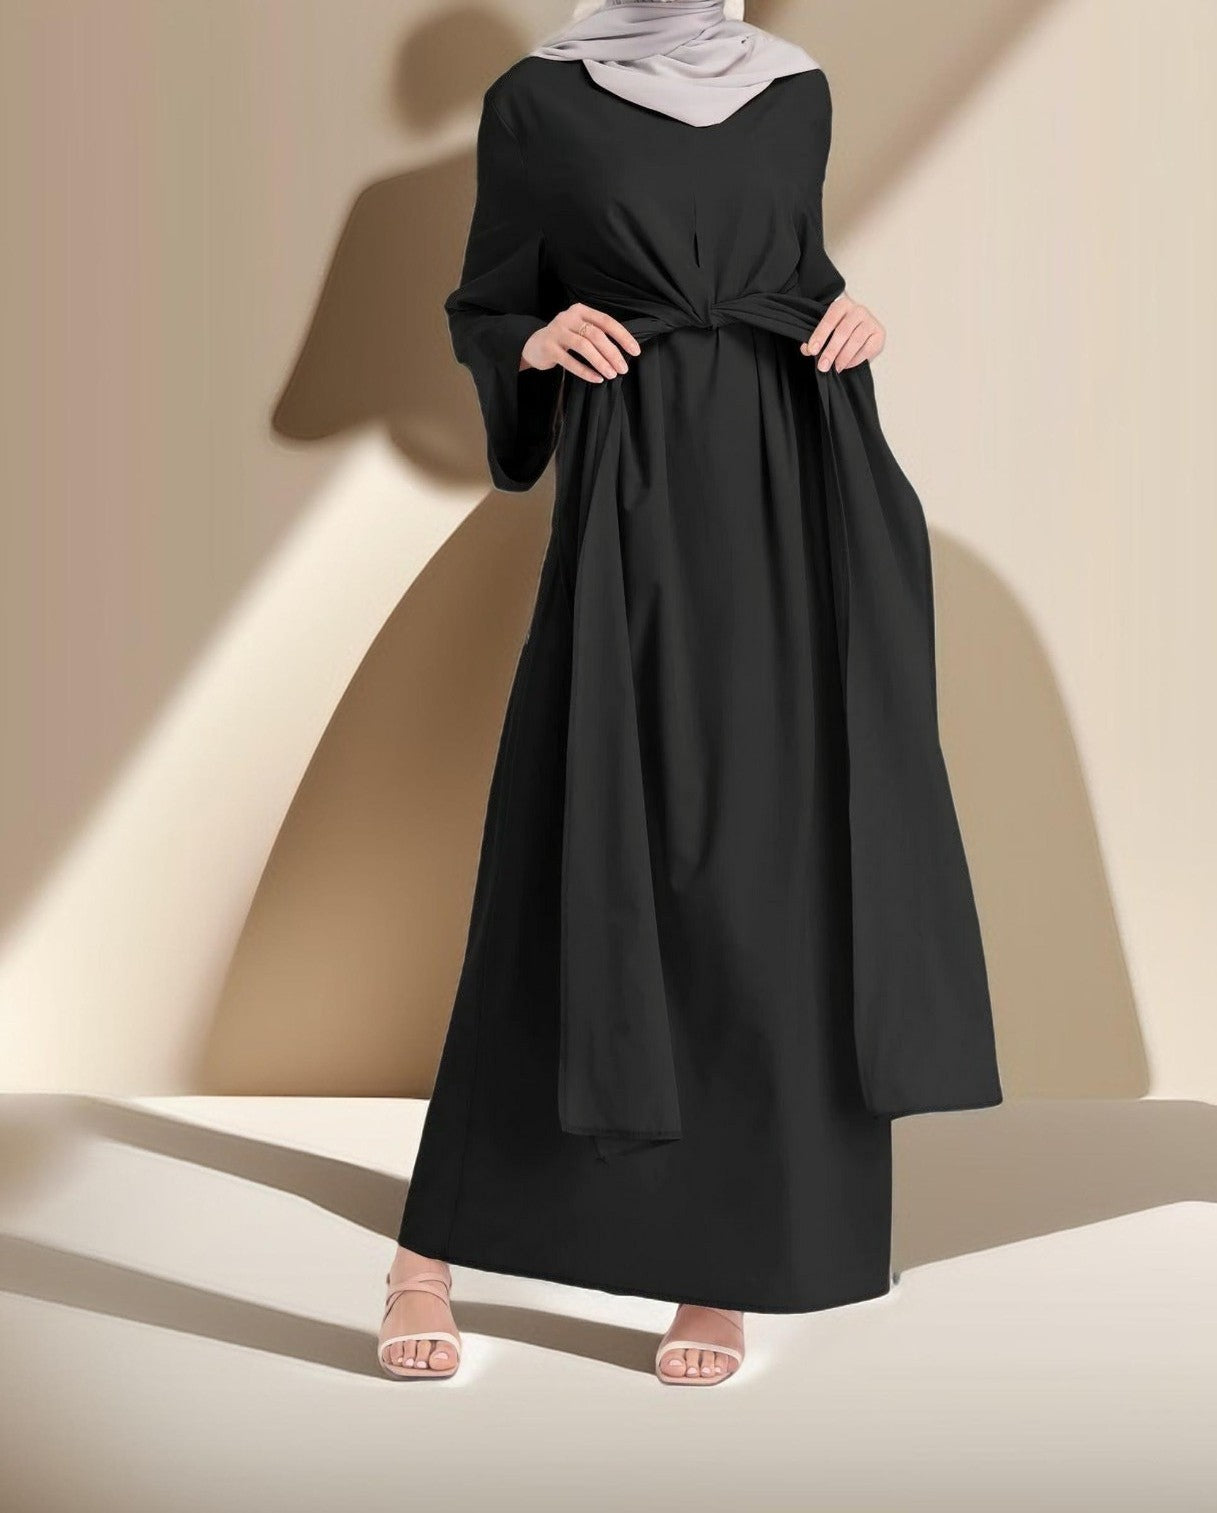 Muslim Robe Black Arabic Abaya-Women's Fashion - Try Modest Limited 